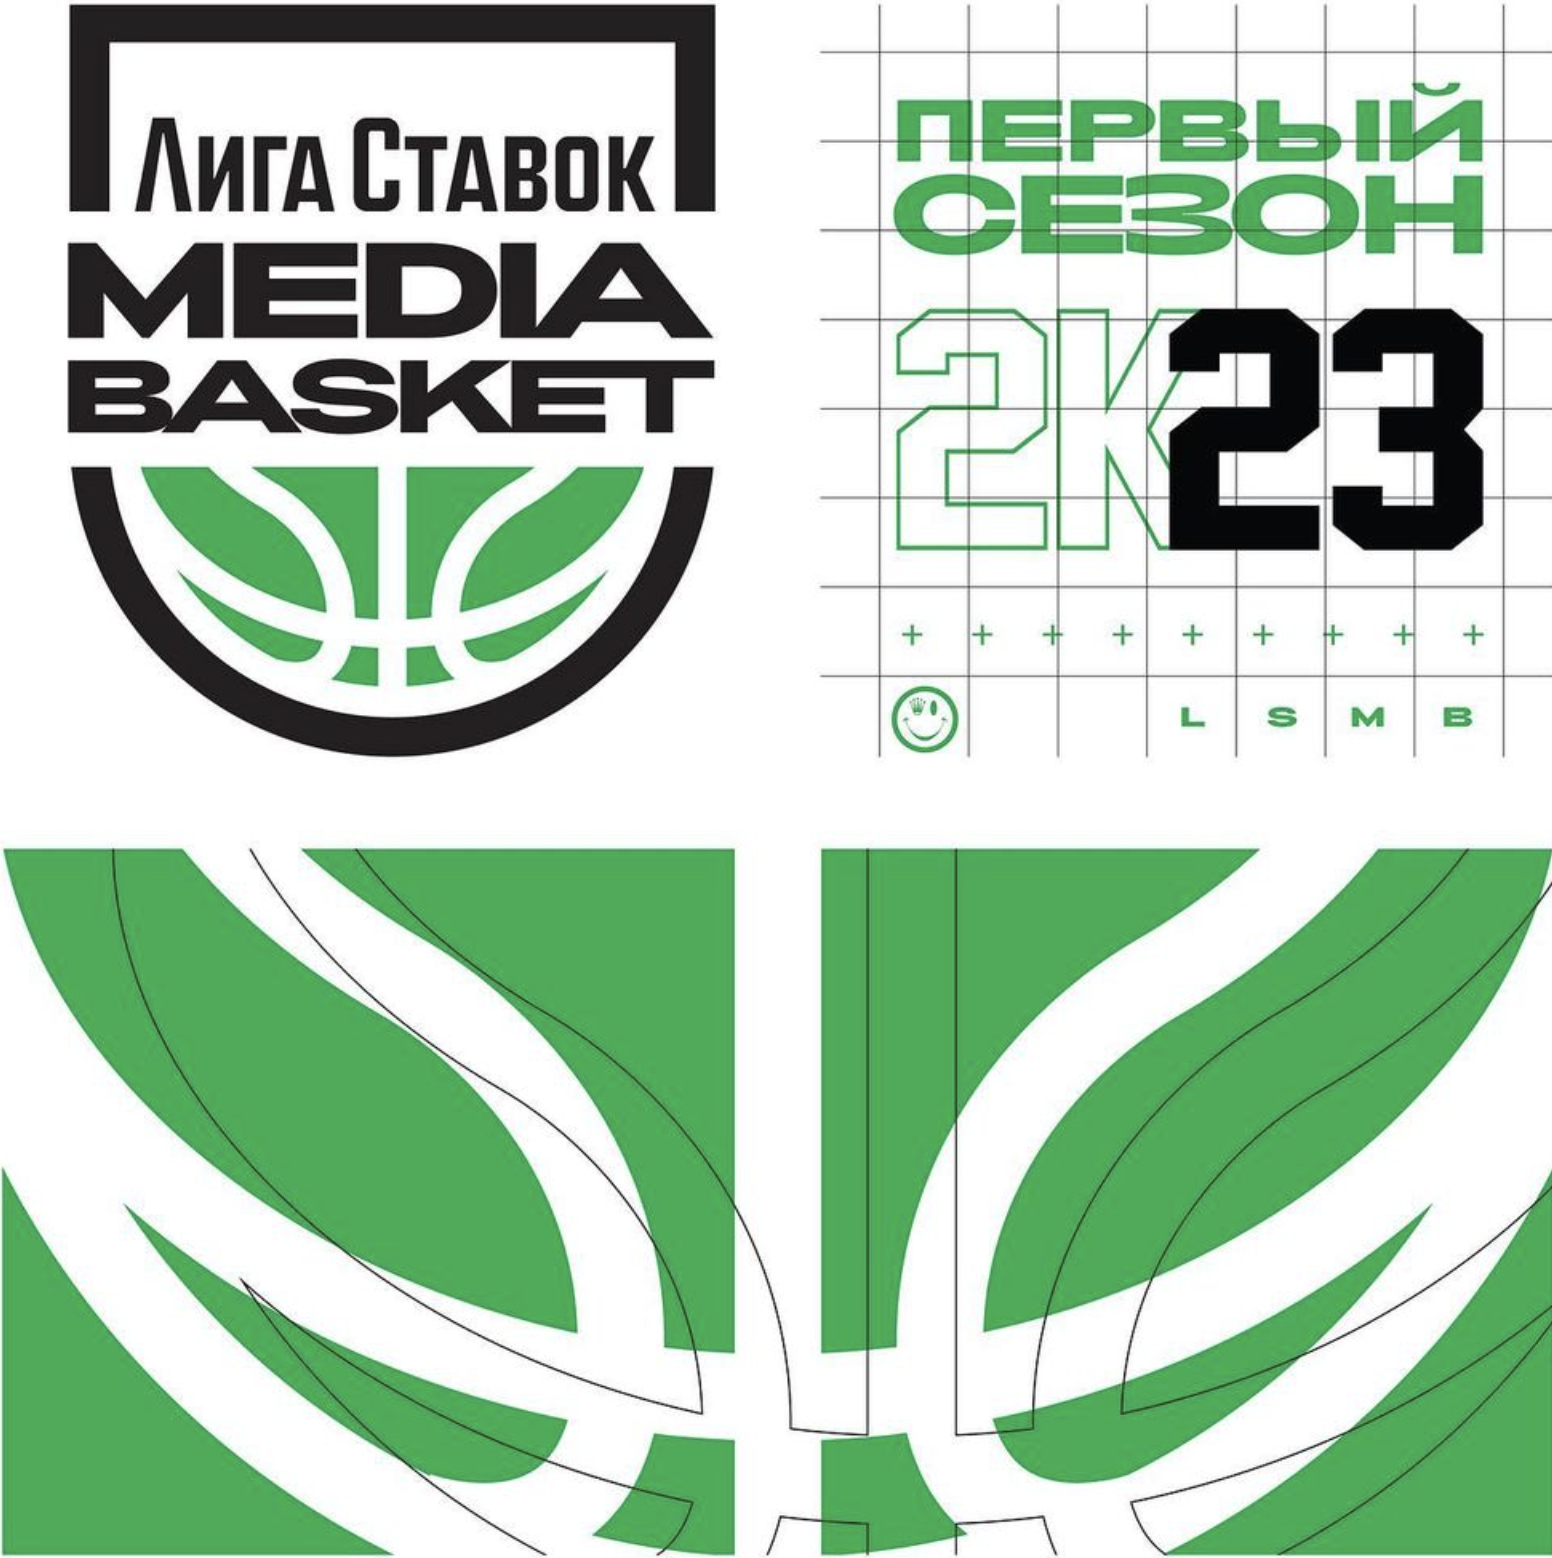 Лига ставок медиа баскет. Медиа Баскет. Медиа Баскет лига ставок. Media Basket лига ставок. Медиа лига баскетбол.